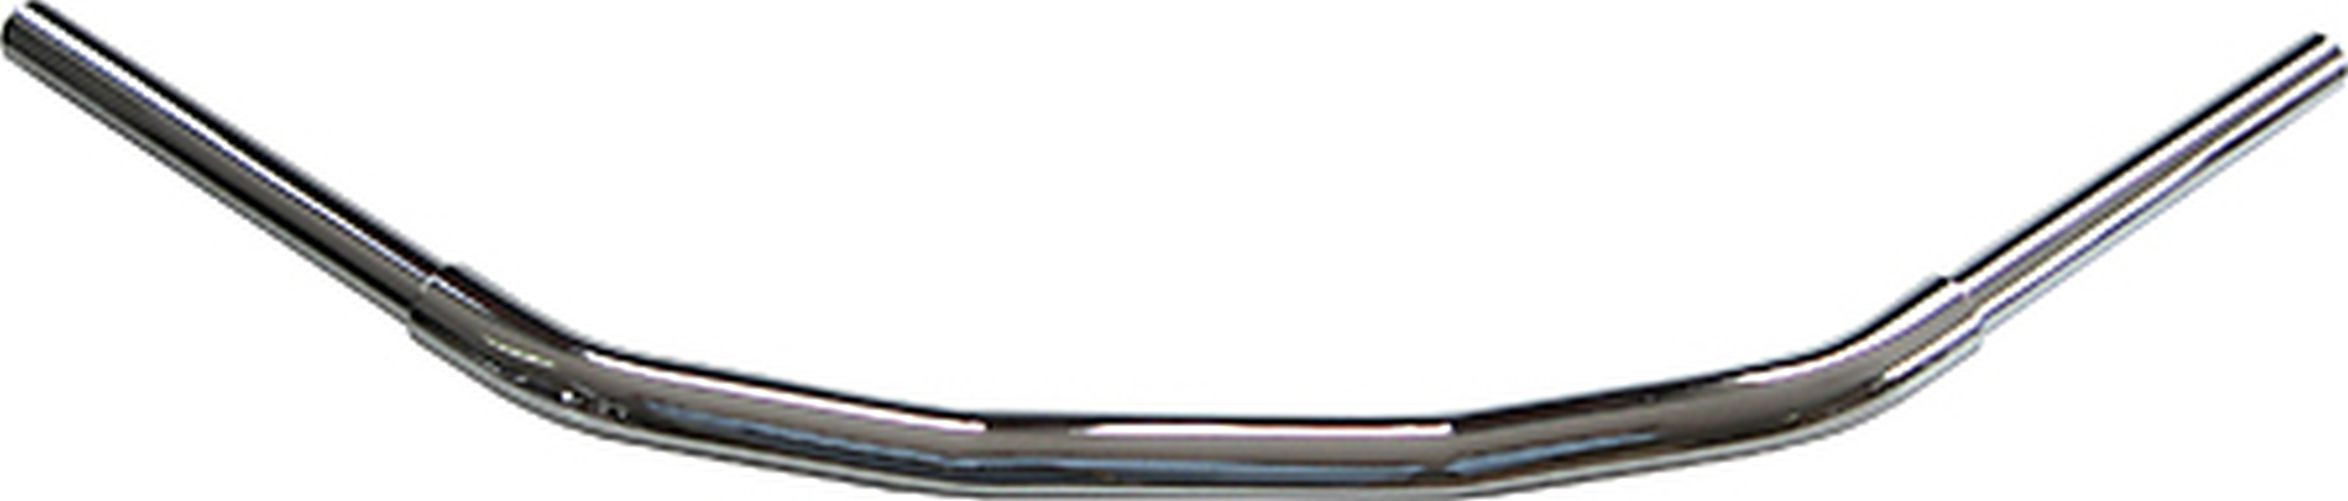 FEHLING Flyer Bar, 1 1/4 Zoll, B 85 cm (Stück)